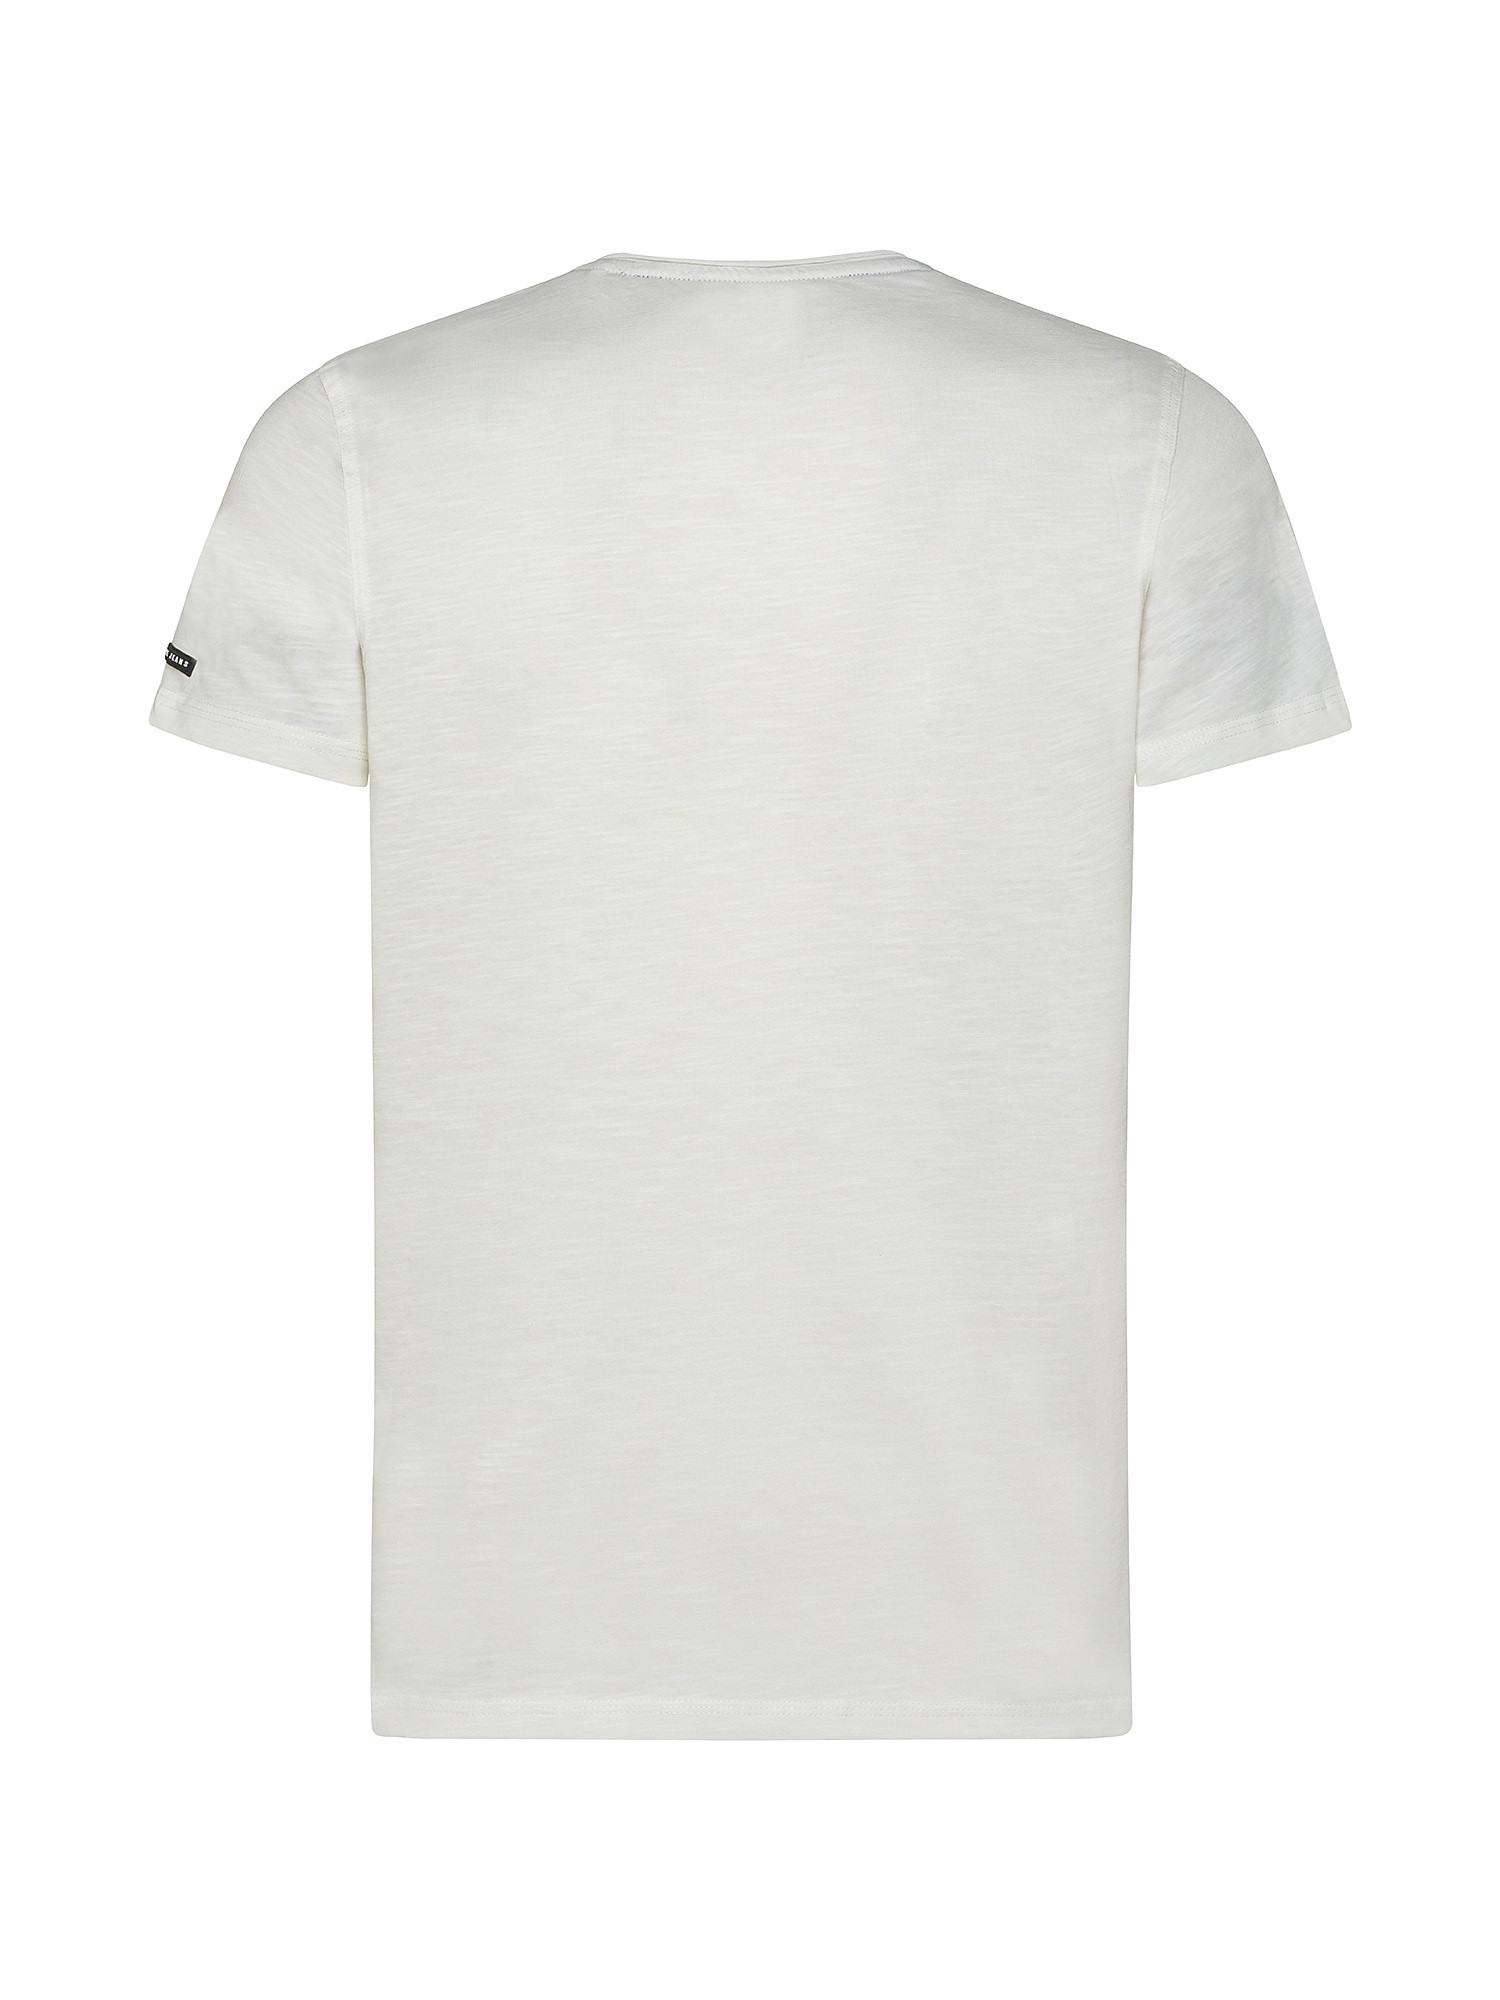 T-shirt in cotone Sherlock, Bianco, large image number 1